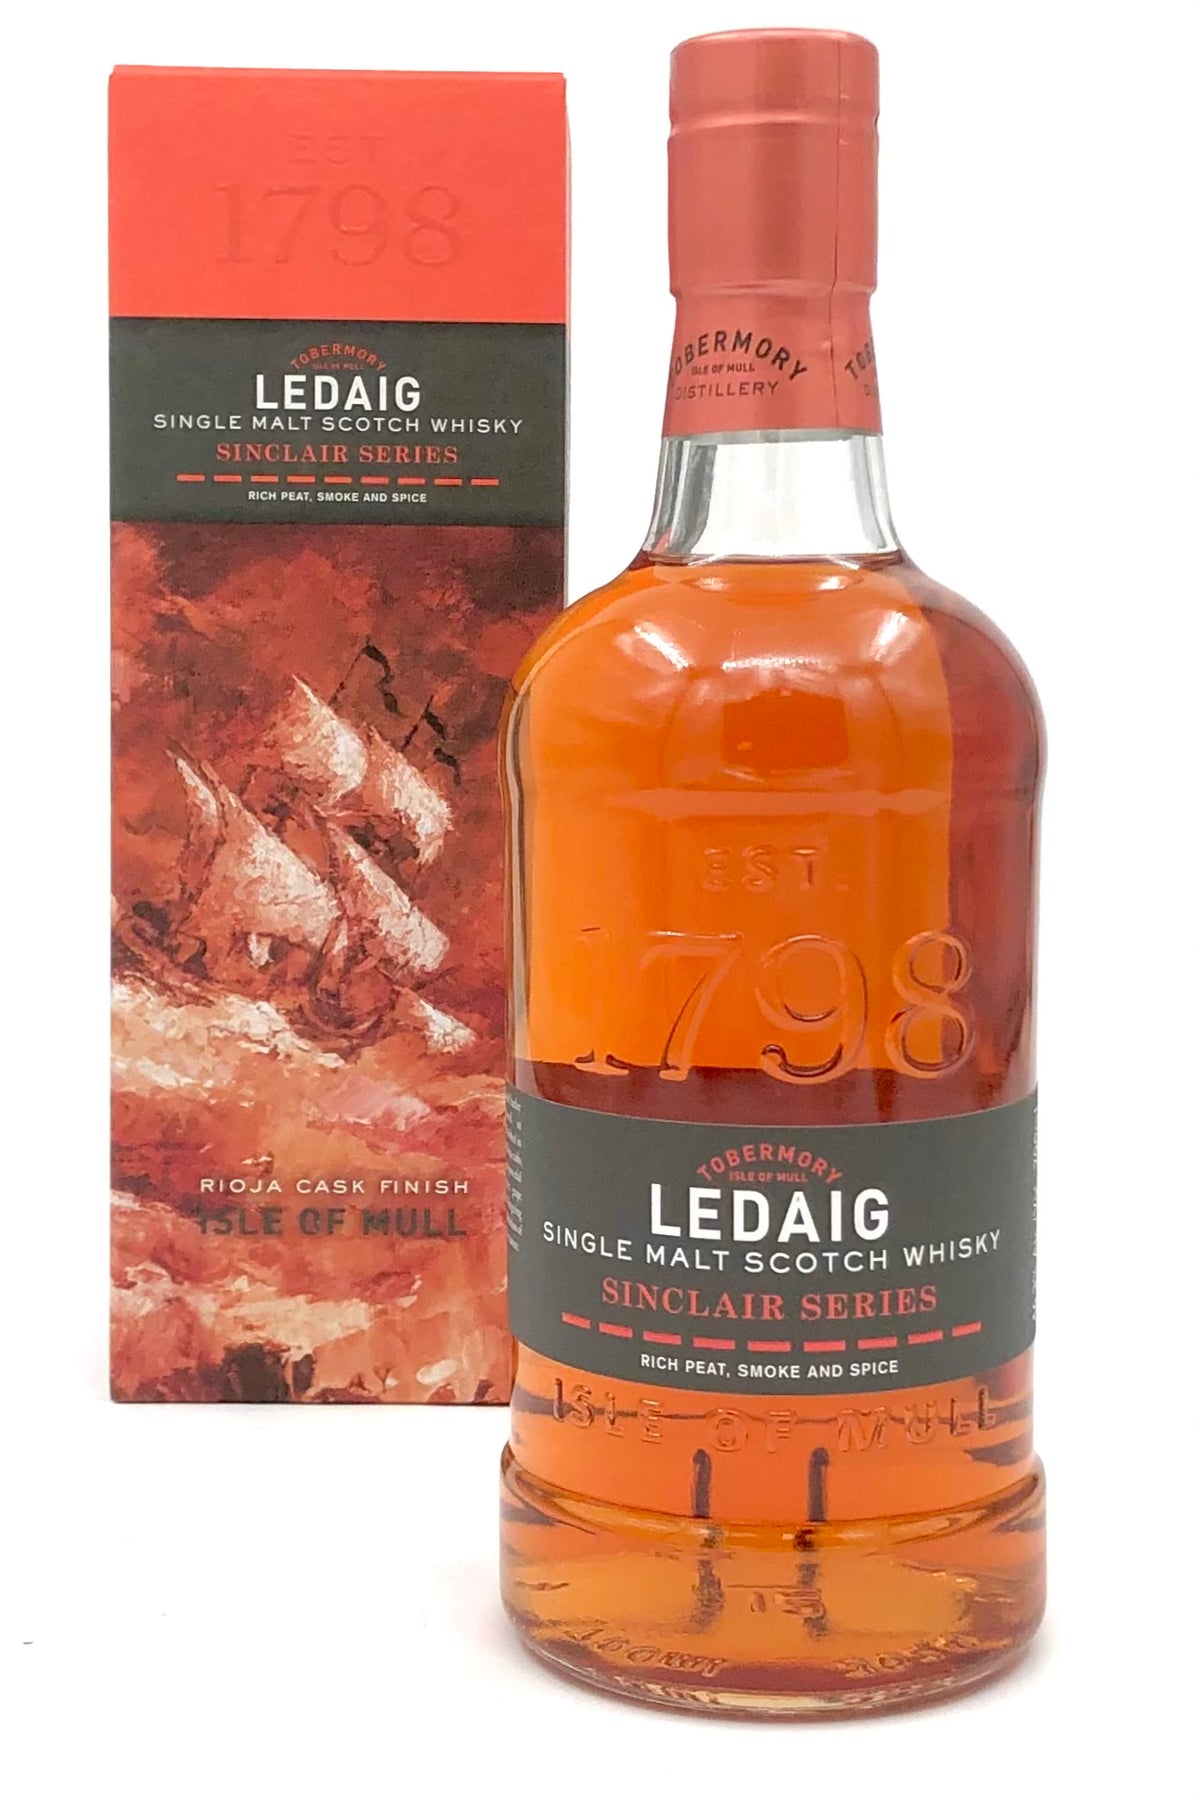 Ledaig Sinclair Series Rioja Cask Finish Scotch Whisky